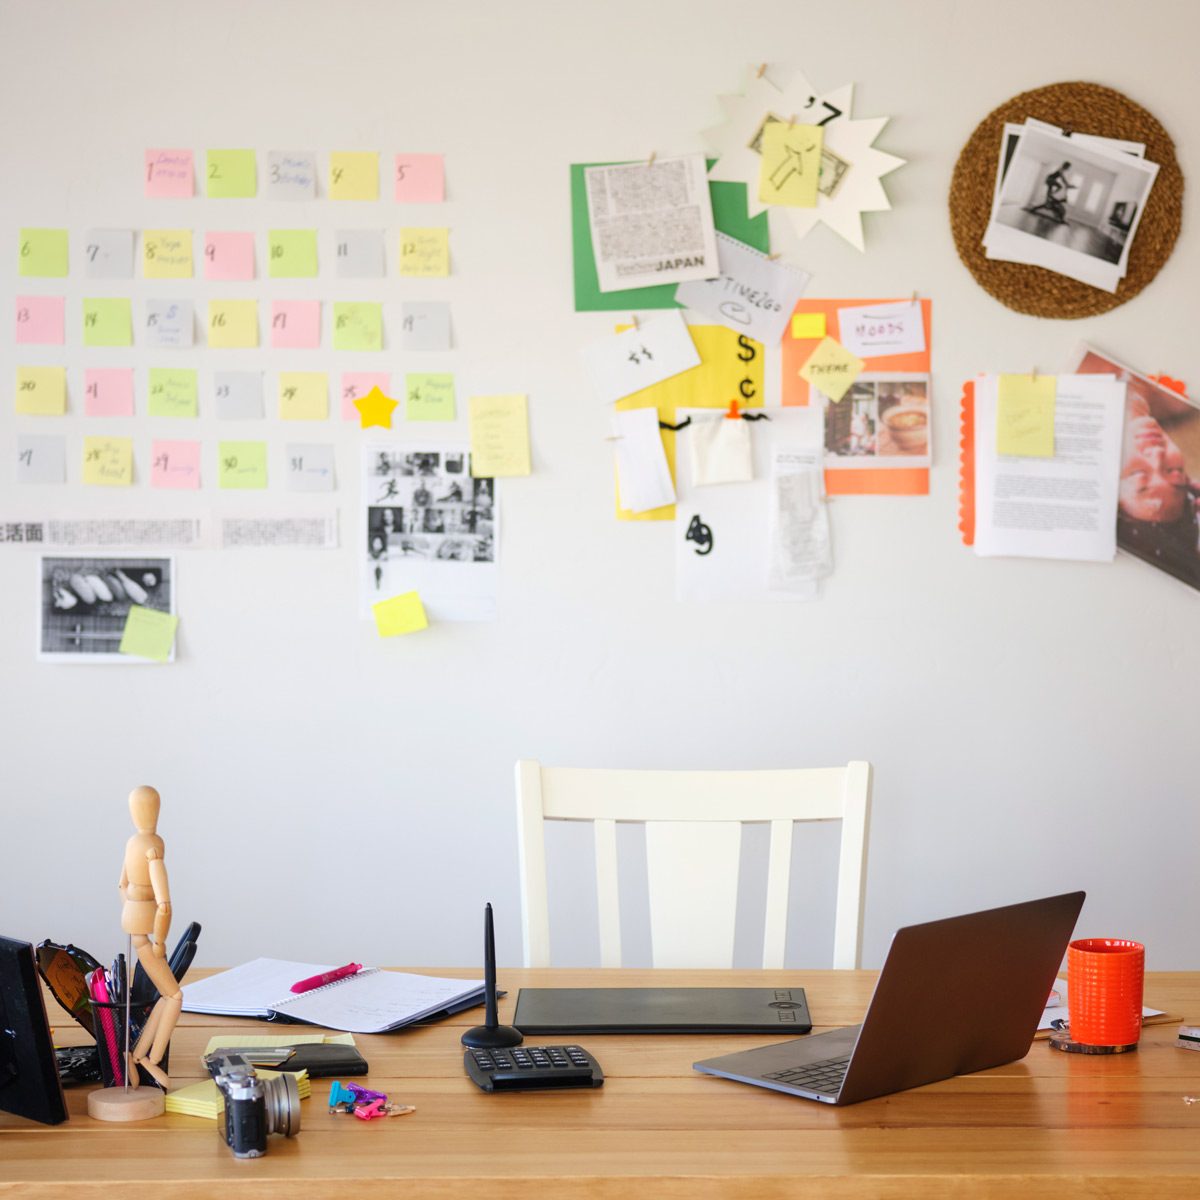 15 Easy Home Office Organization Ideas | The Family Handyman